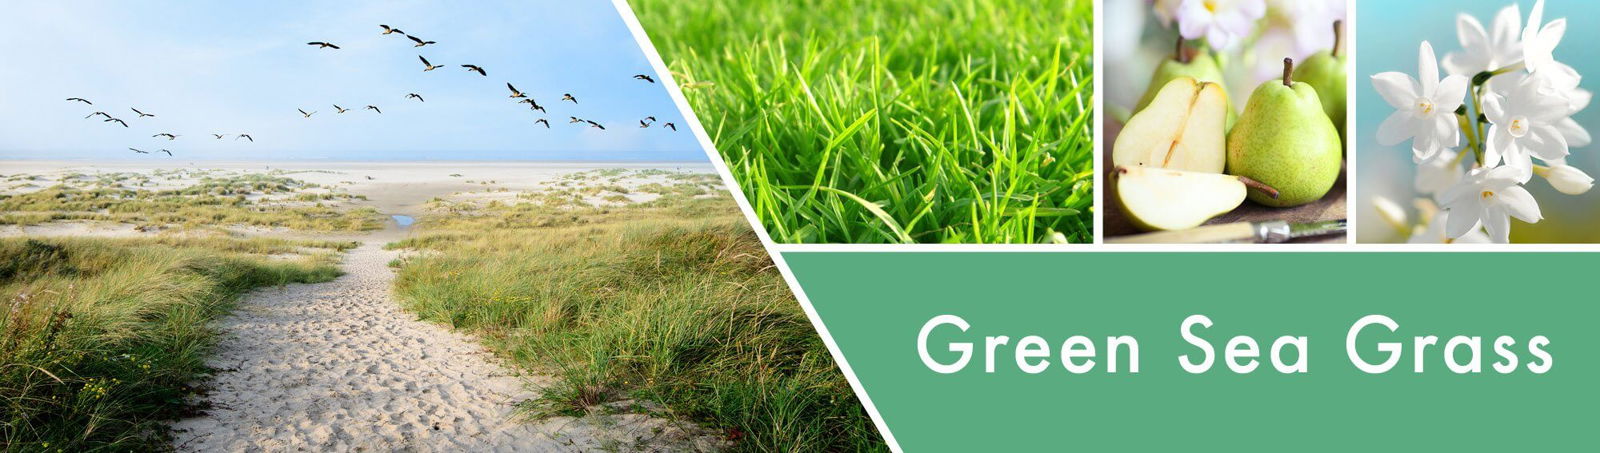 Green Seagrass 411g